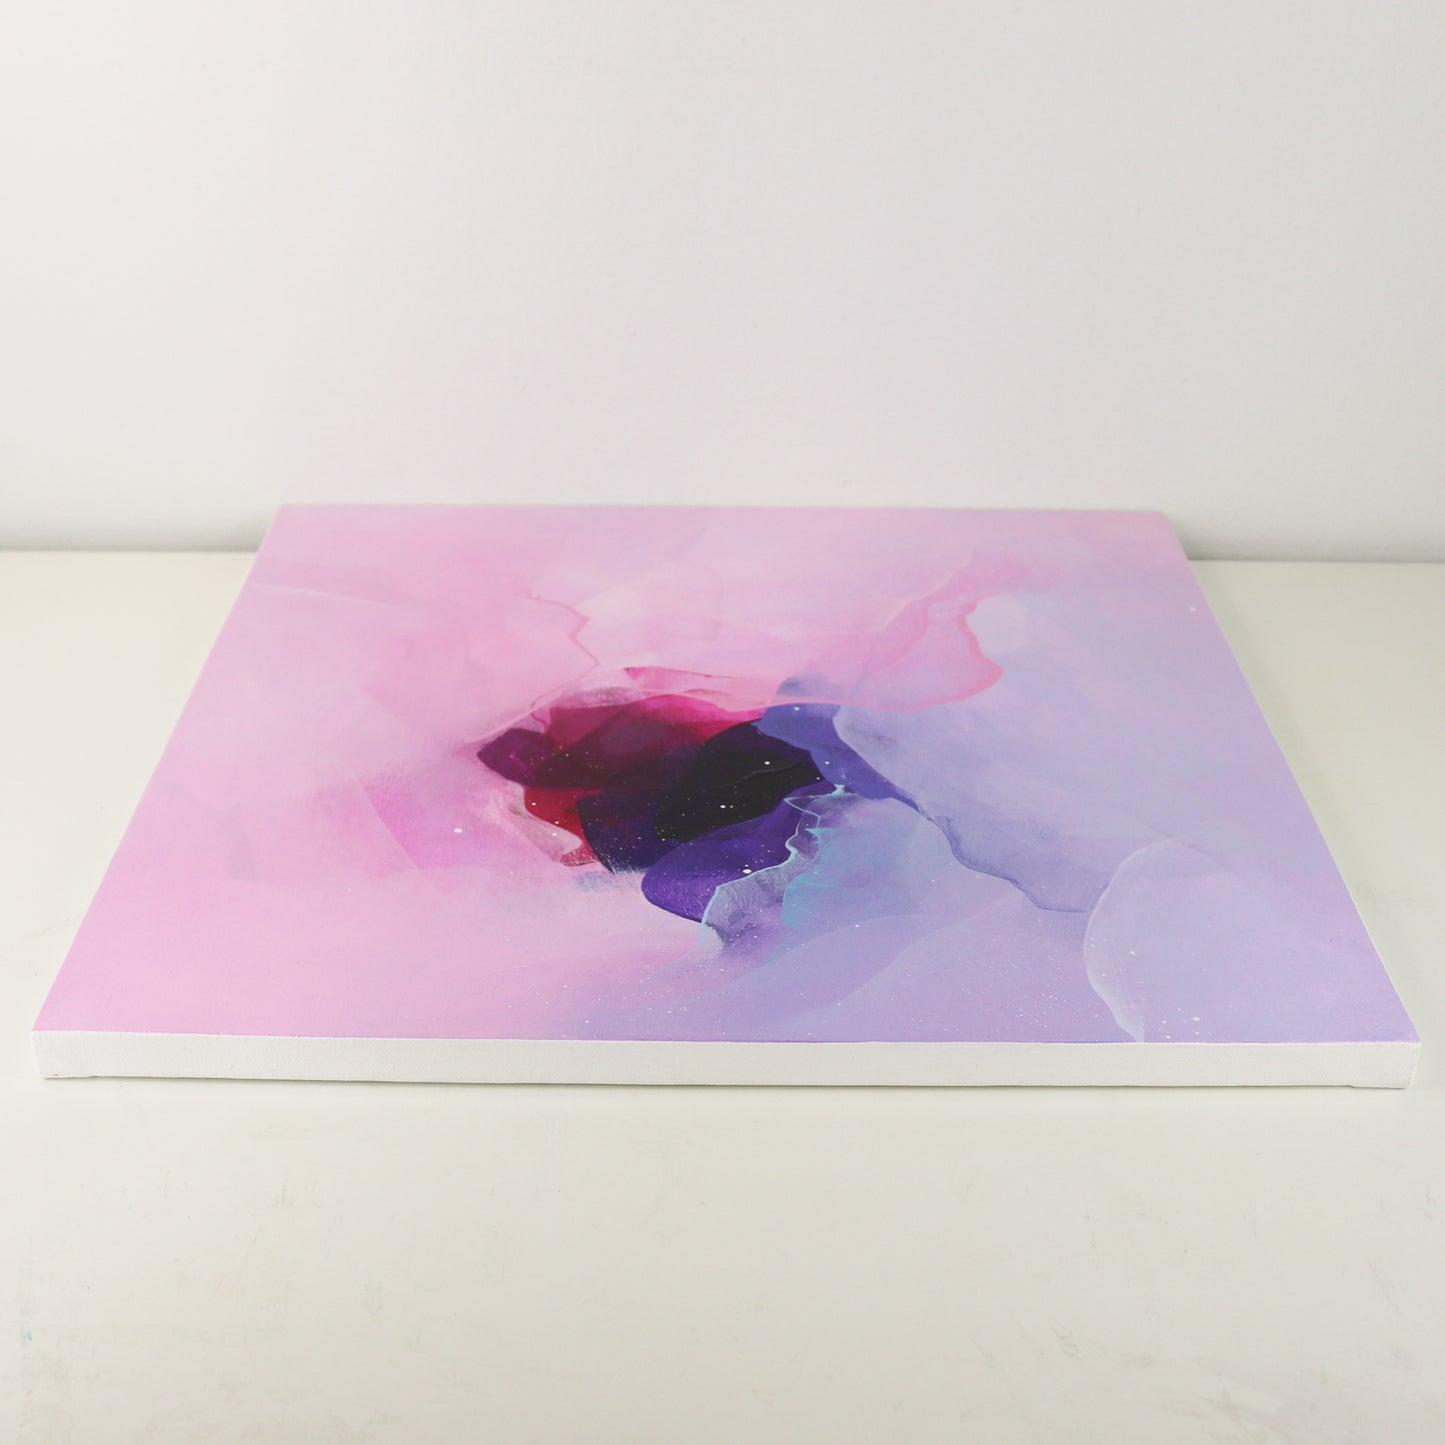 18"x18" Original Painting: "Lavender Portal II"